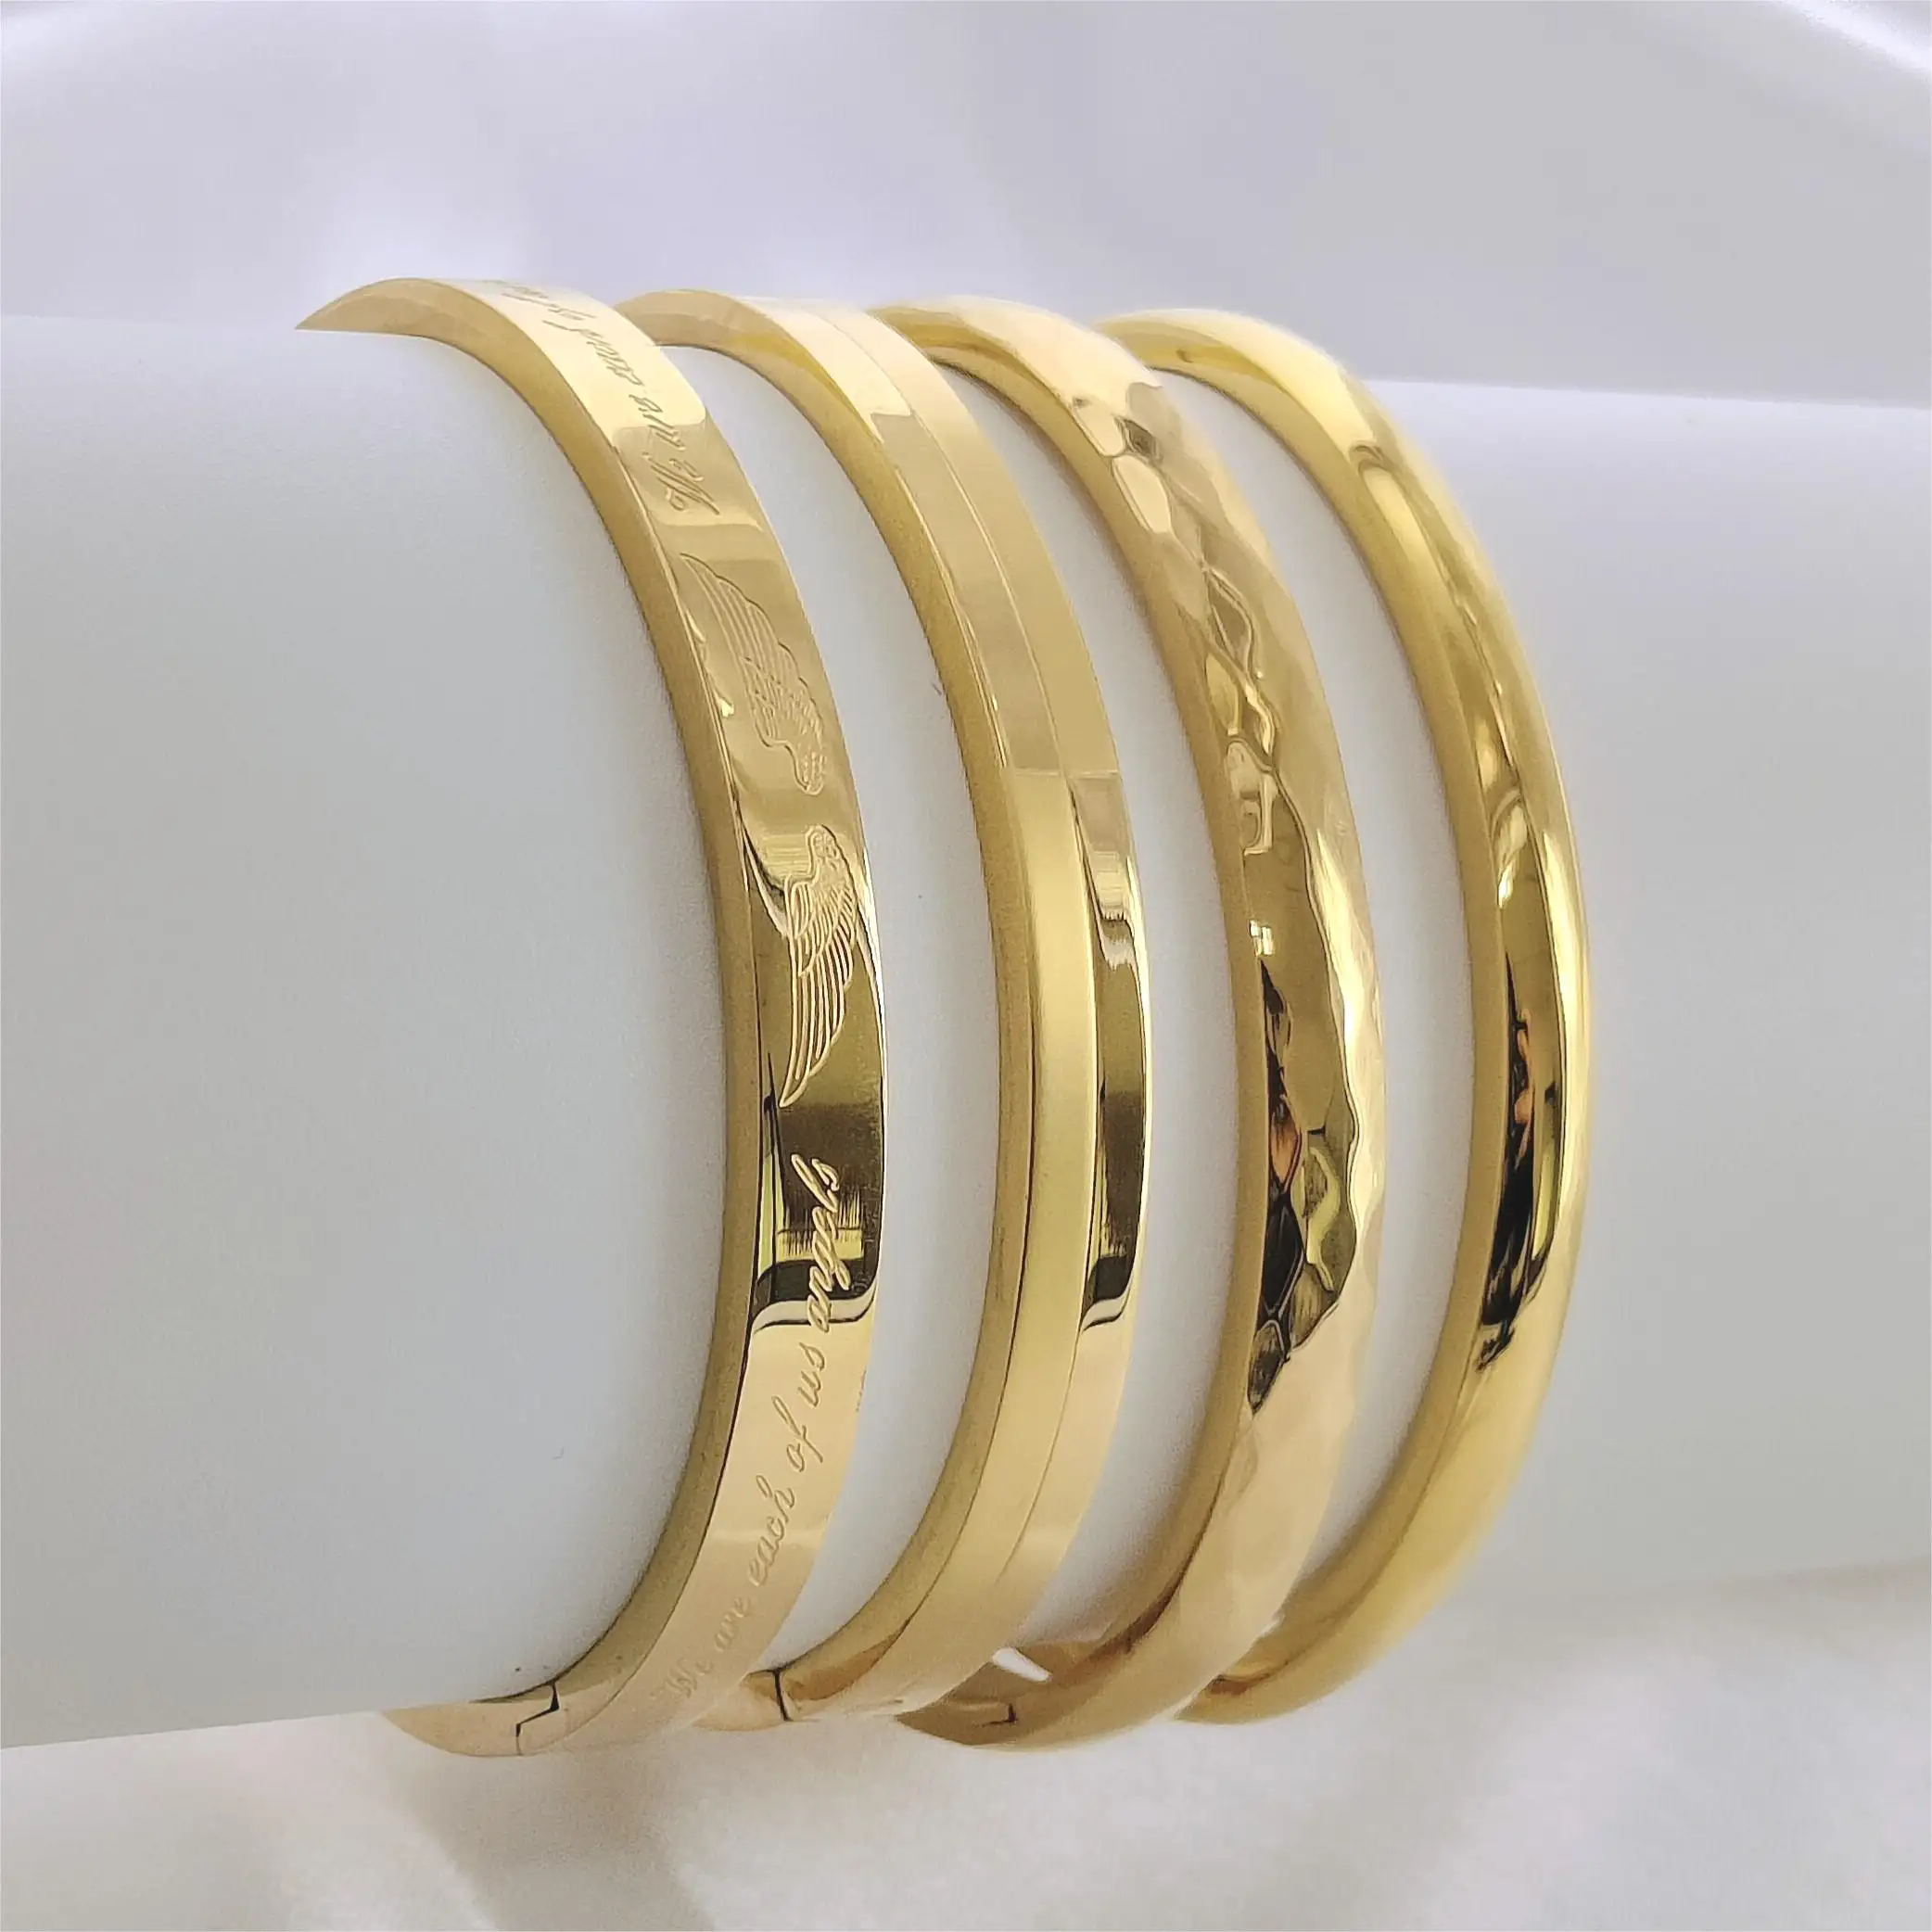 FANJIN gelang perhiasan mode emas 18k, Gelang bangle minimalis sudut berlapis emas 18k, gelang perhiasan mode tebal warna mawar